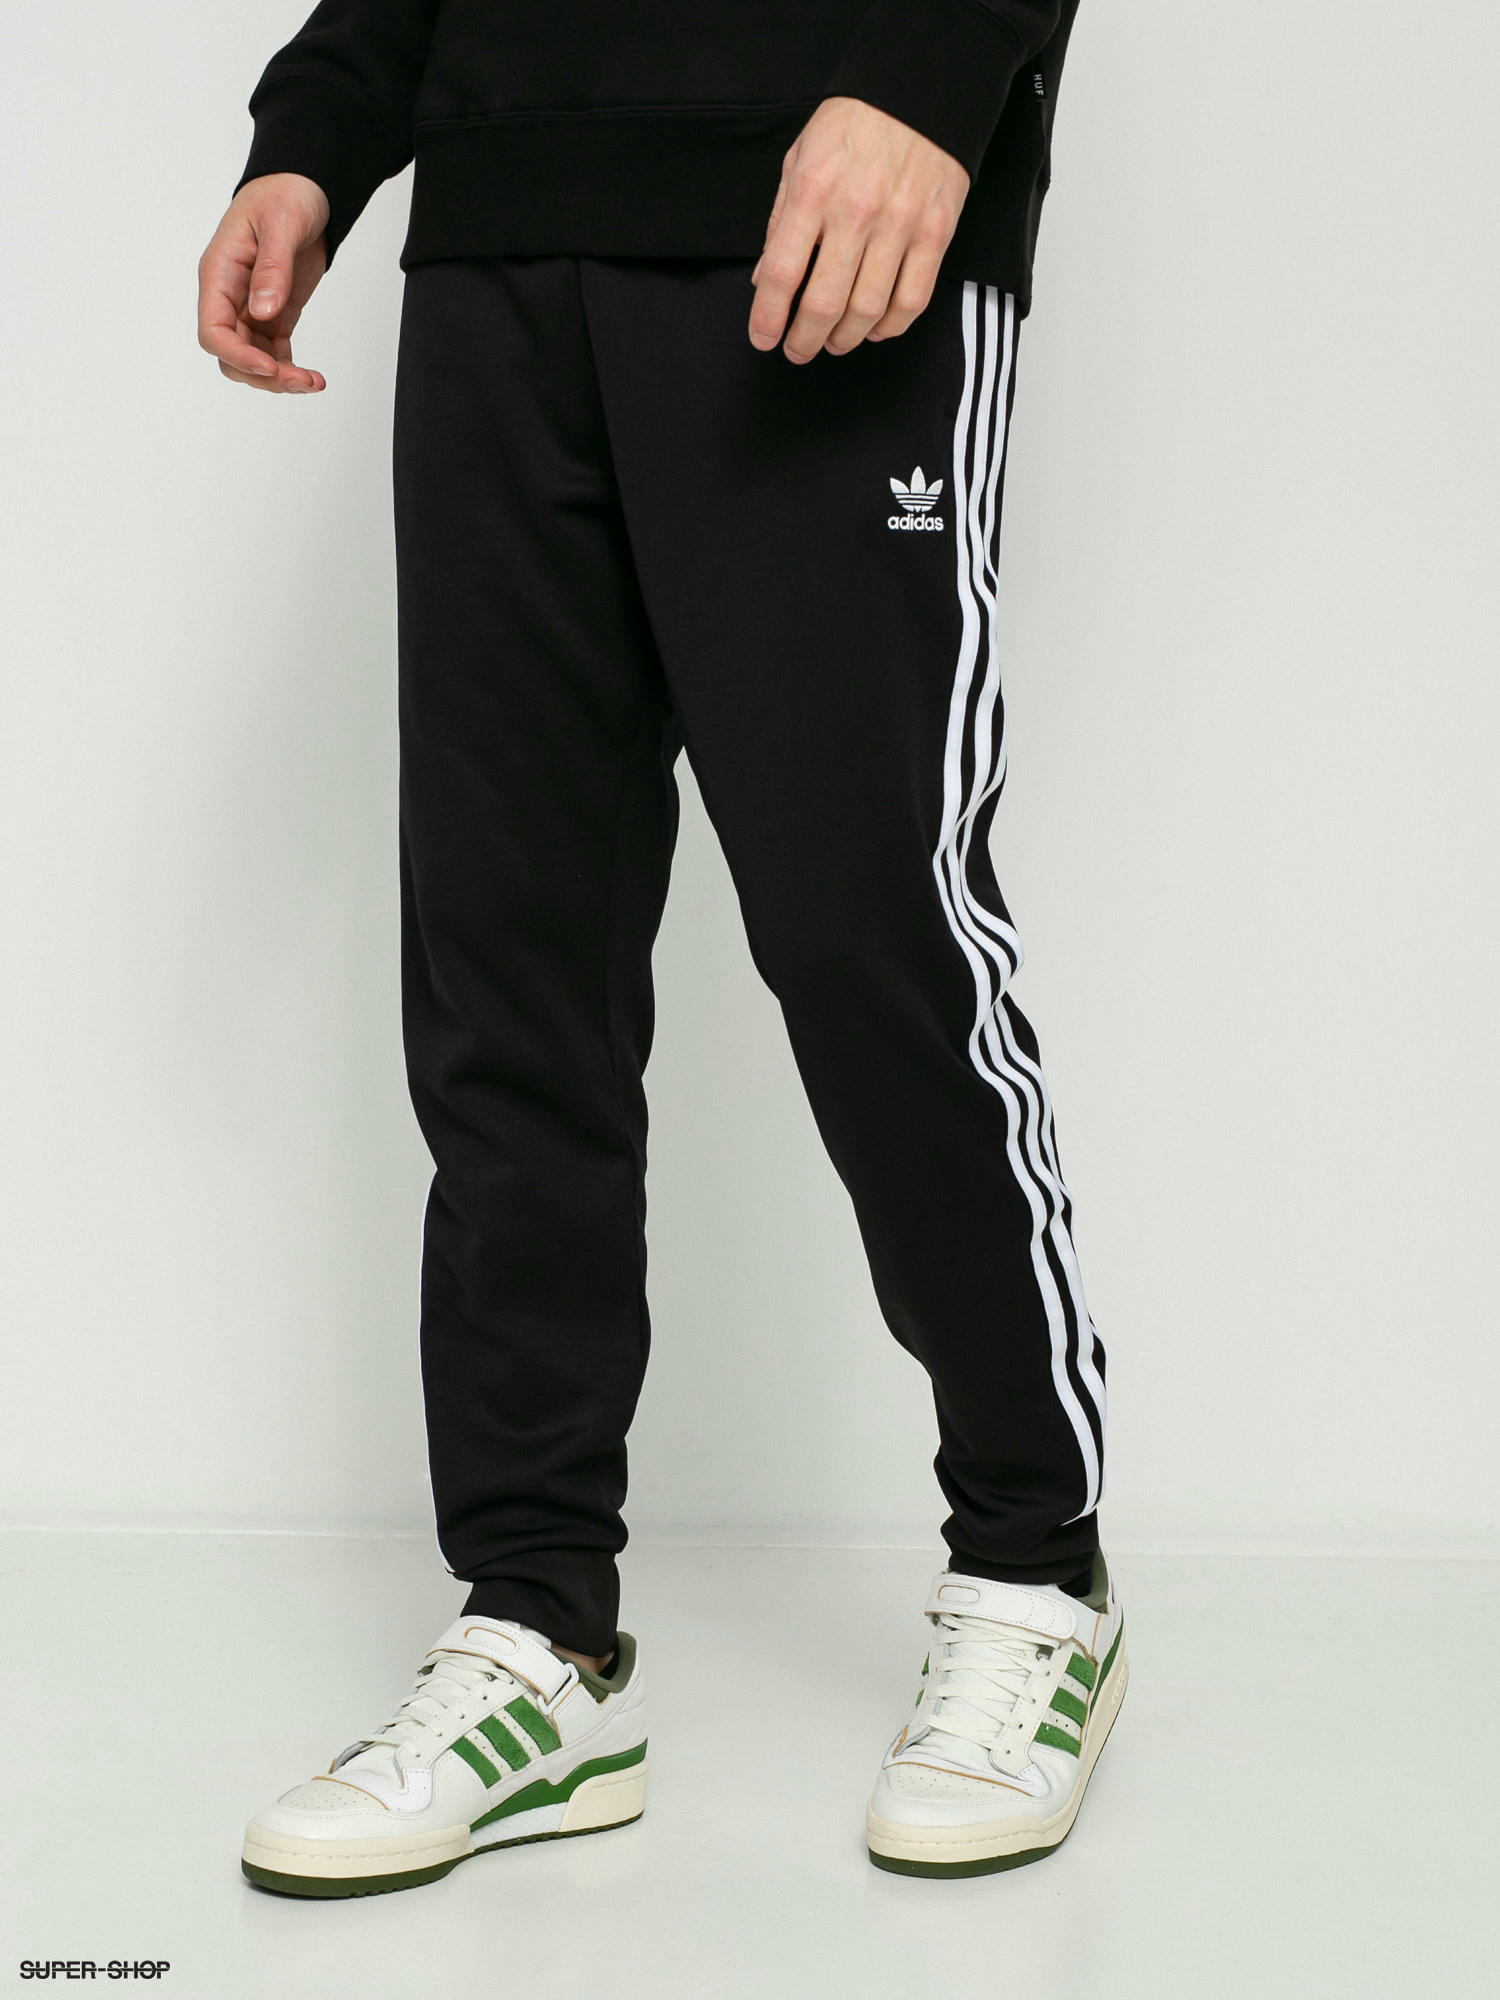 Women's Clothing - Own the Run 3-Stripes Pants - Black | adidas Oman